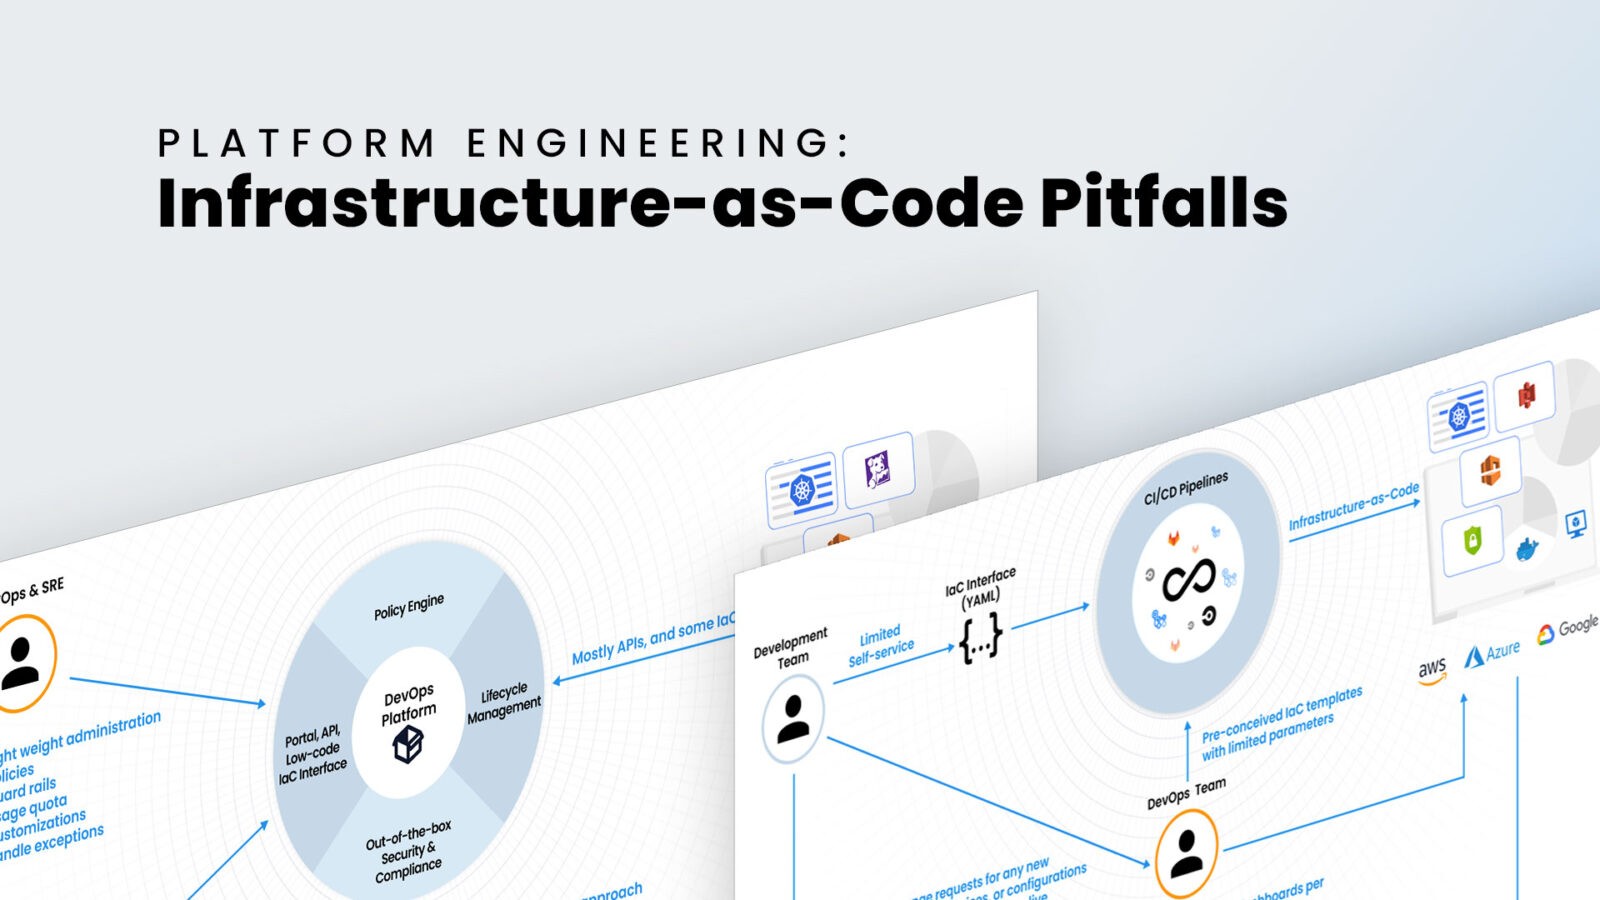 Infrastructure-as-code Pitfalls in Platform Engineering